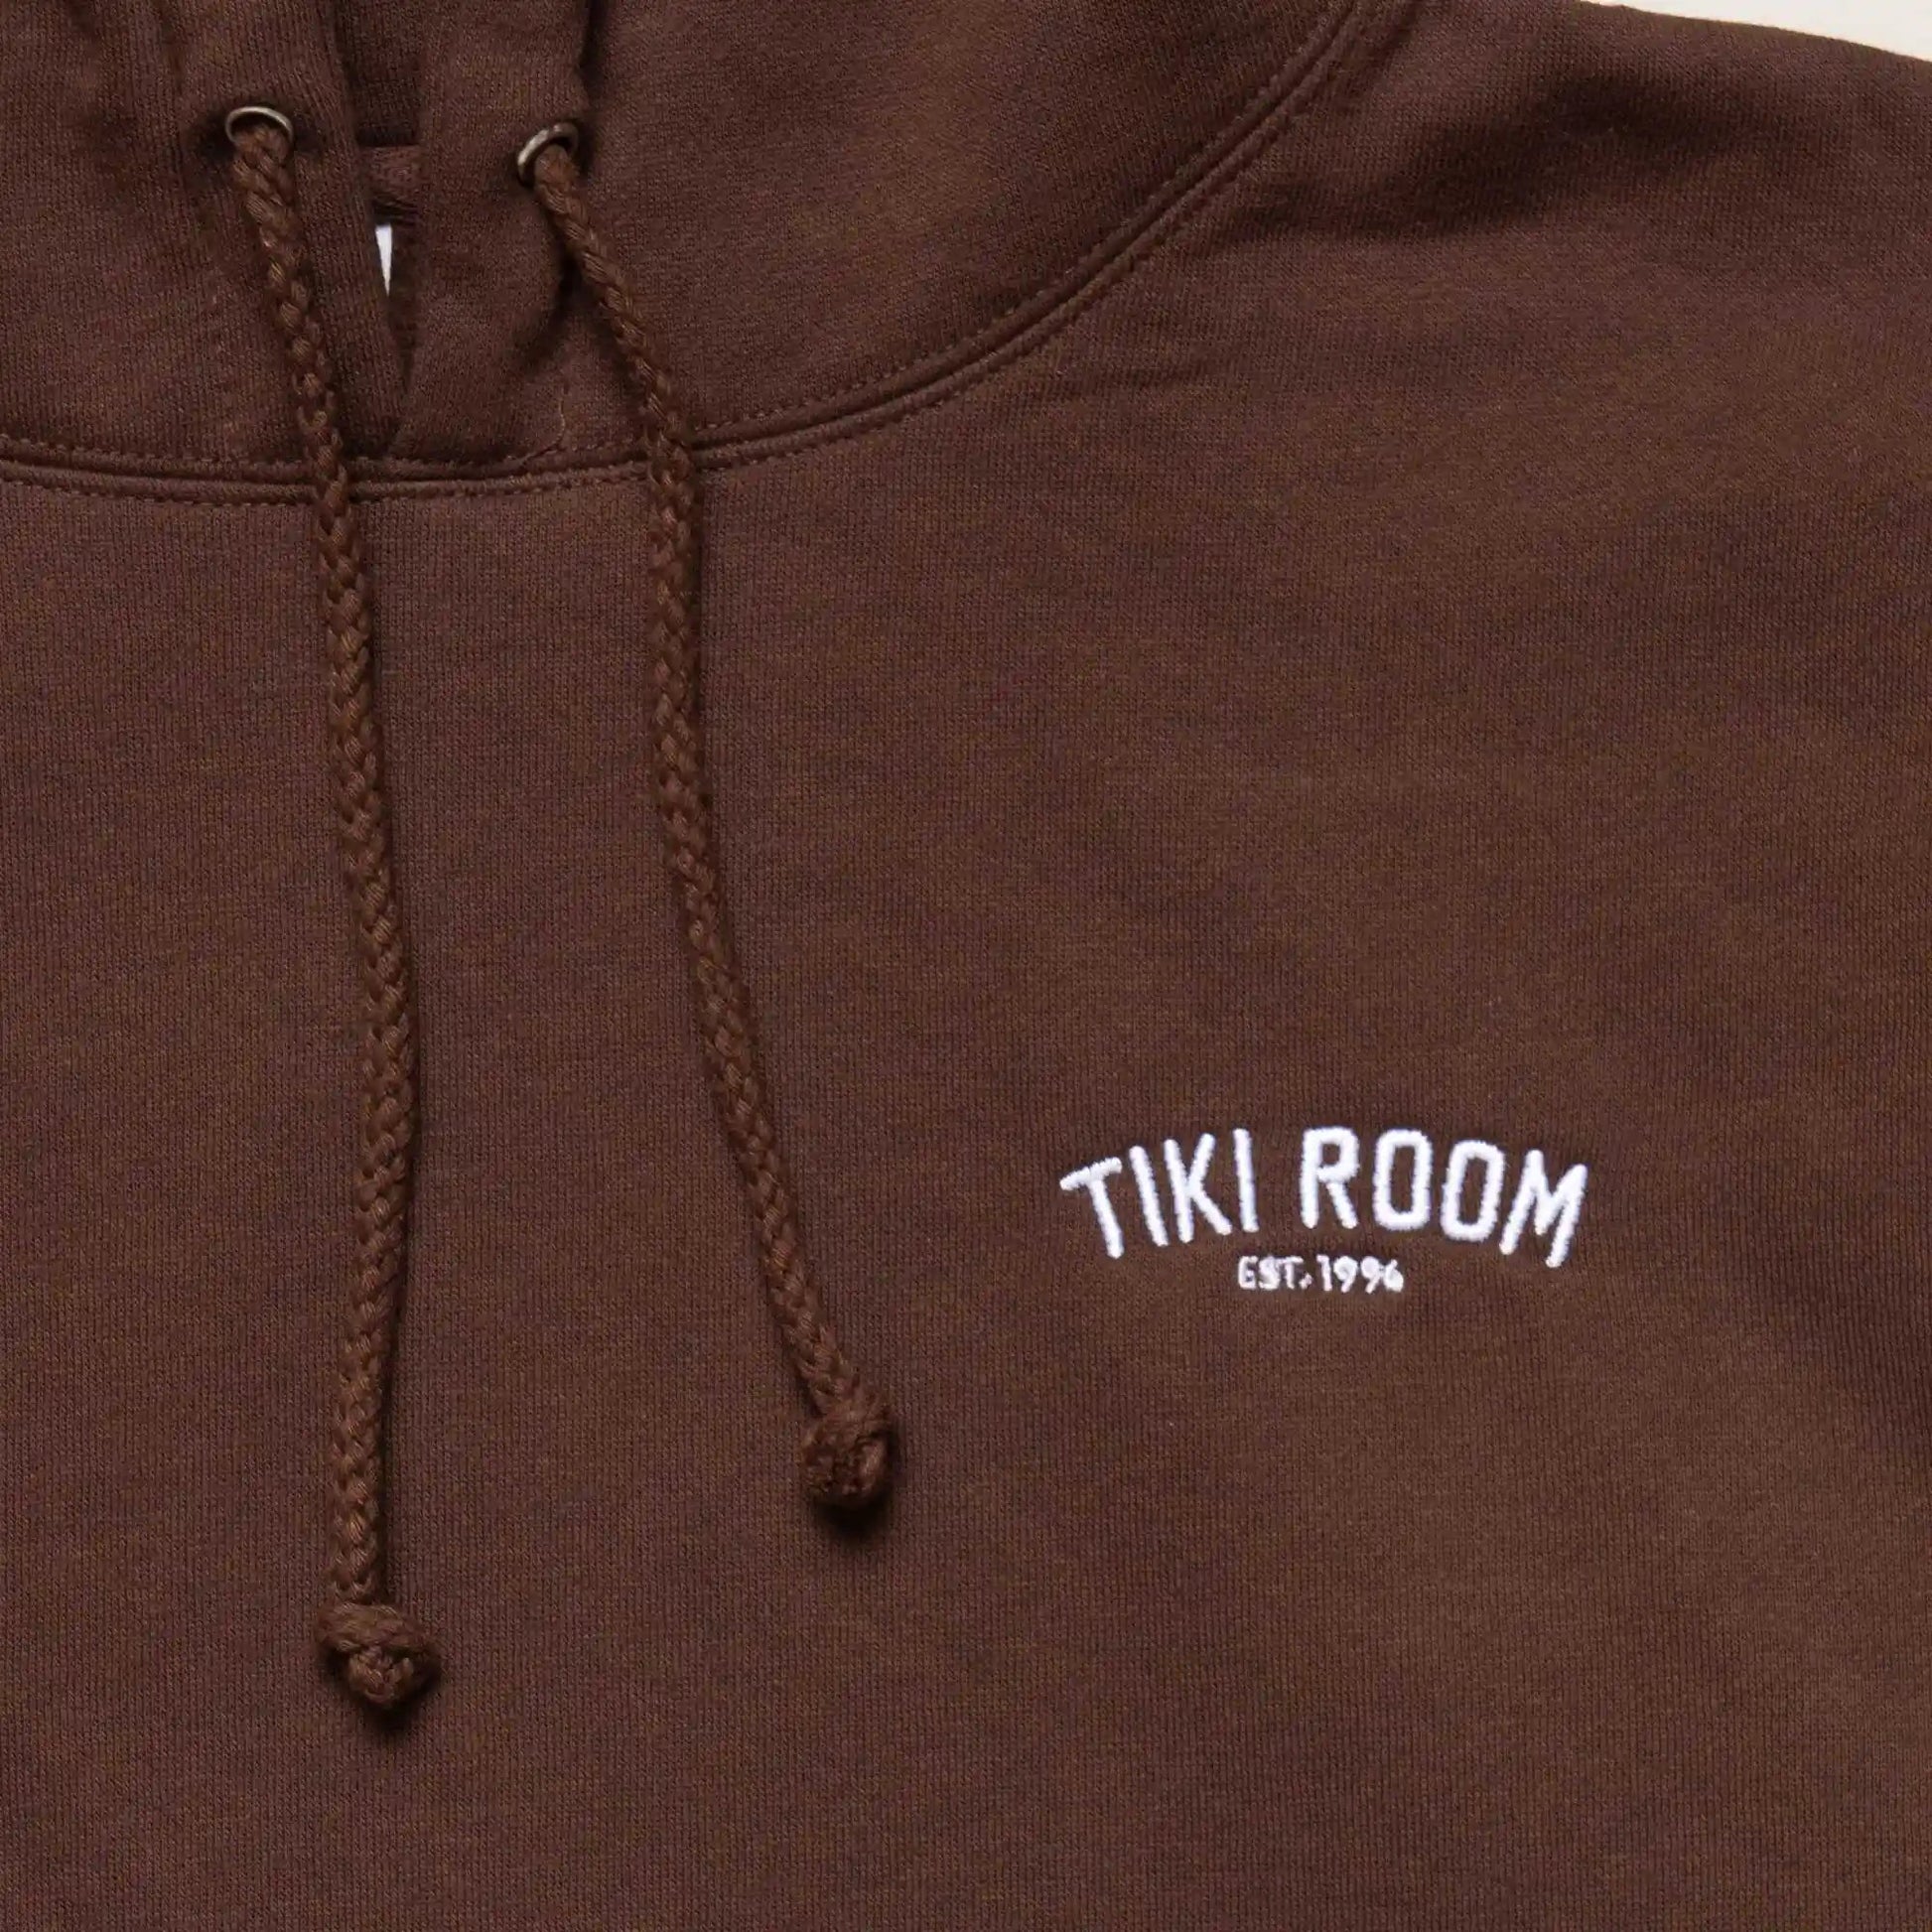 Tiki Room Embroidered Small Arch Heavyweight Hoody, brown - Tiki Room Skateboards - 2